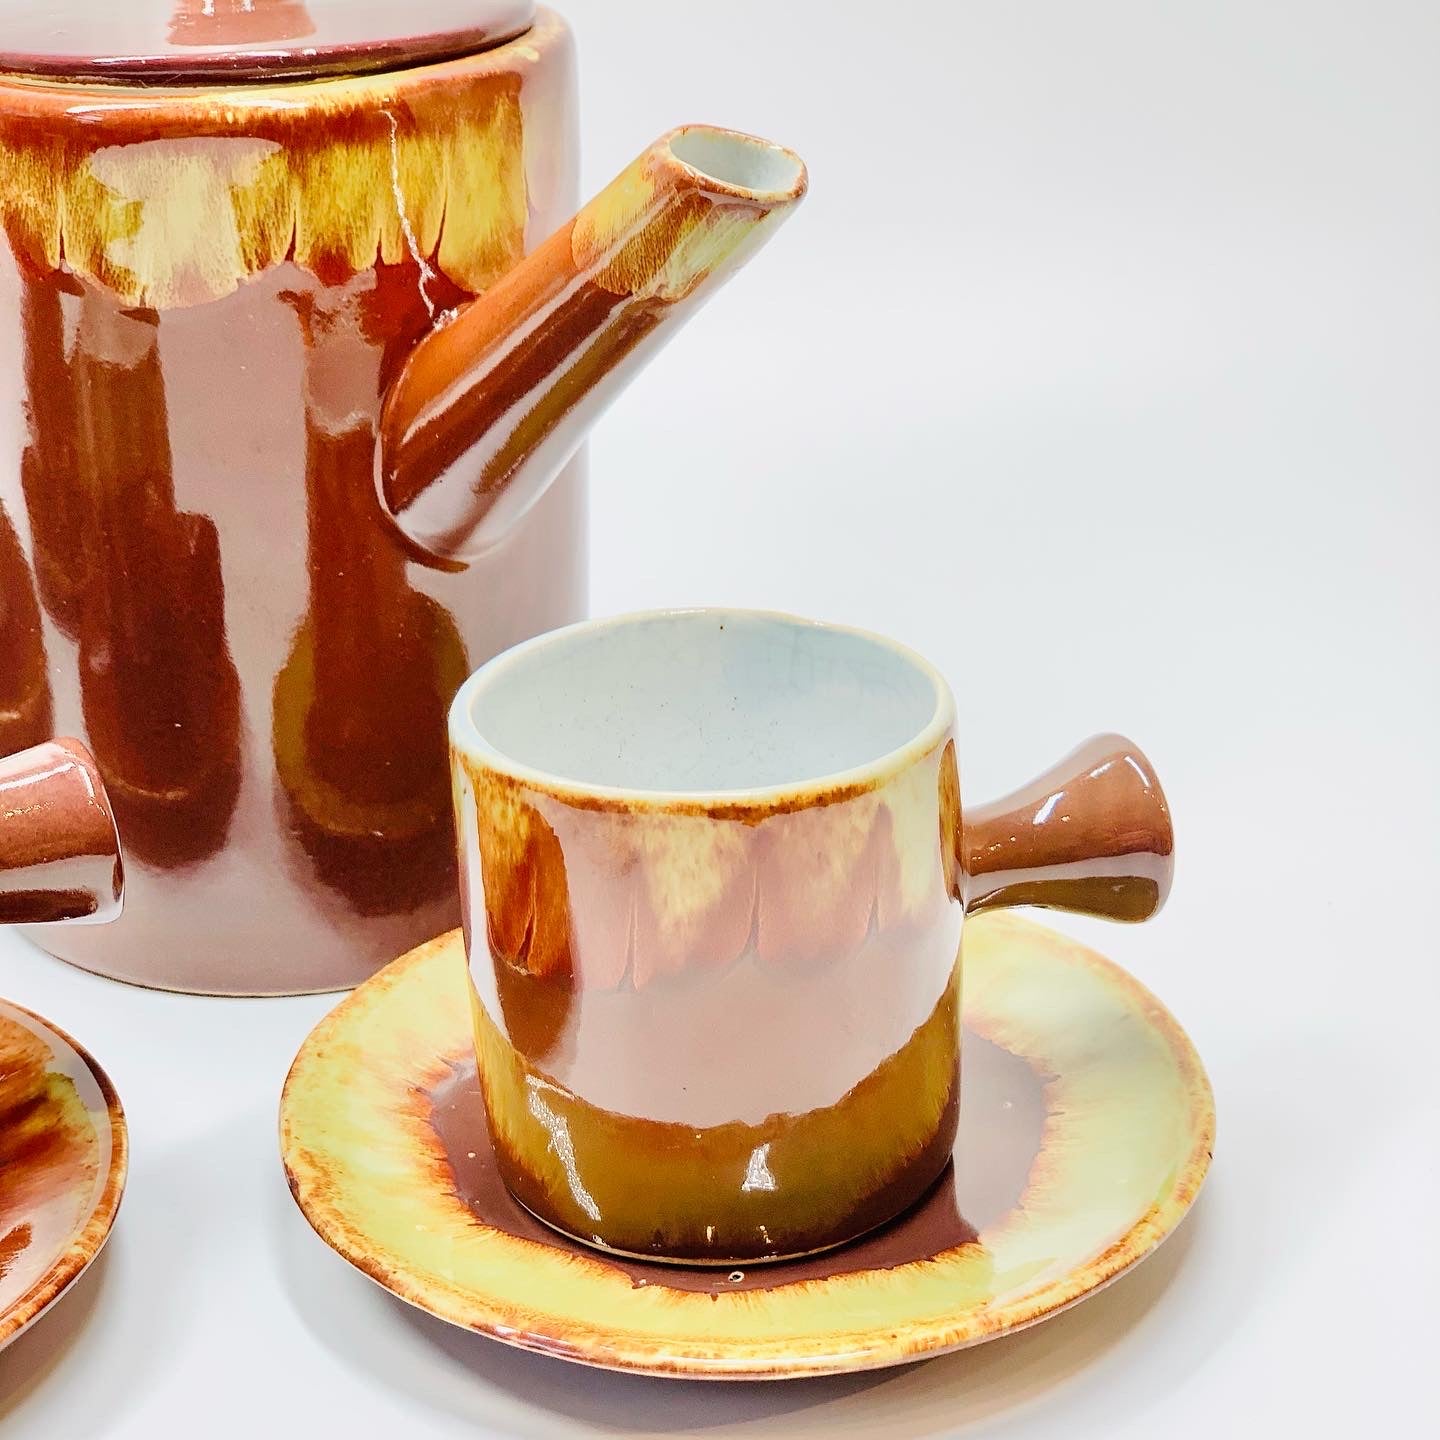 Hand made Midcentury modern glazed coffee set